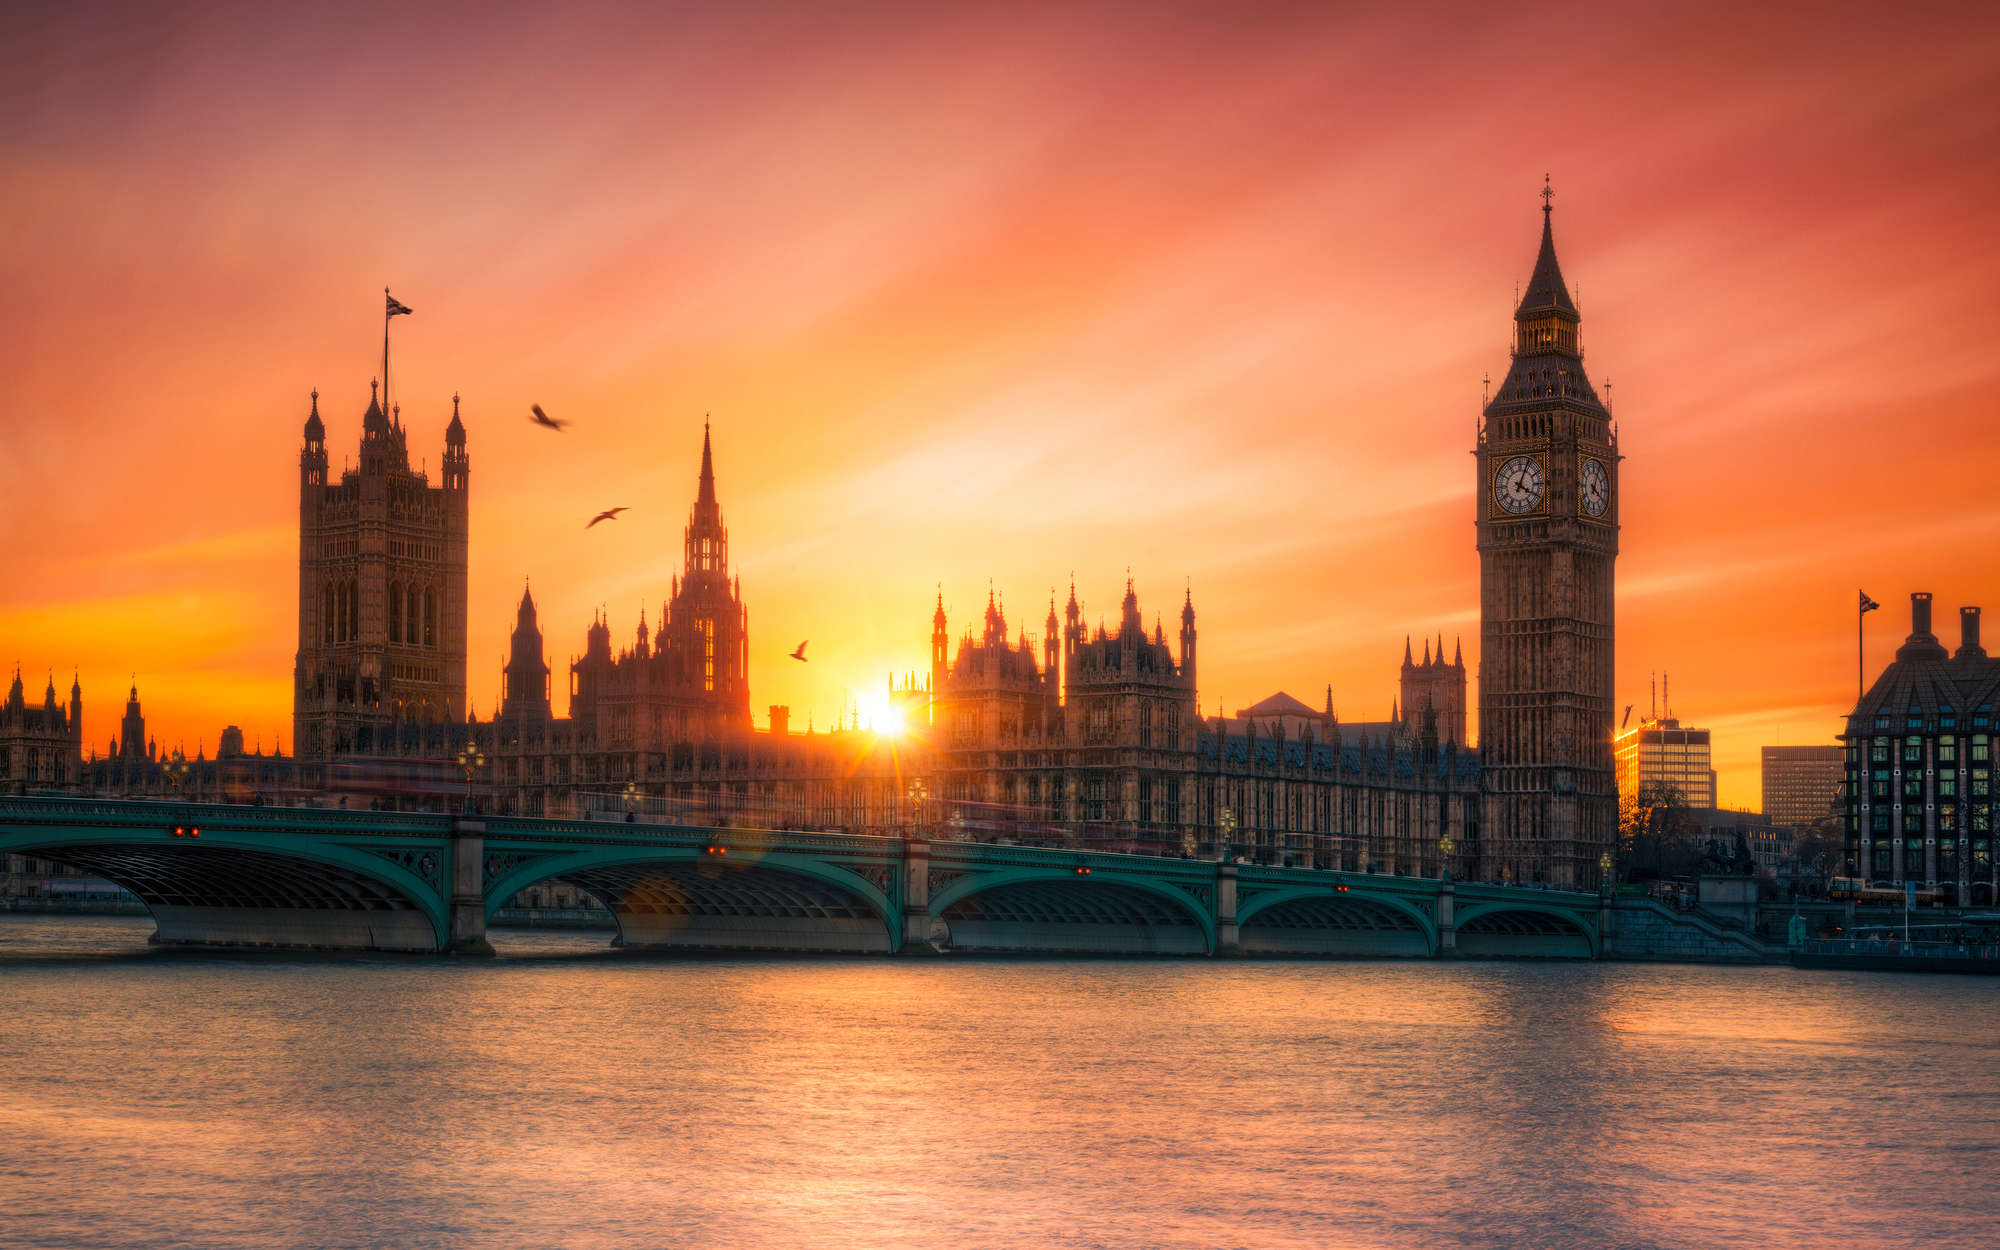             Photo wallpaper London Skyline in the sunset - Premium smooth fleece
        